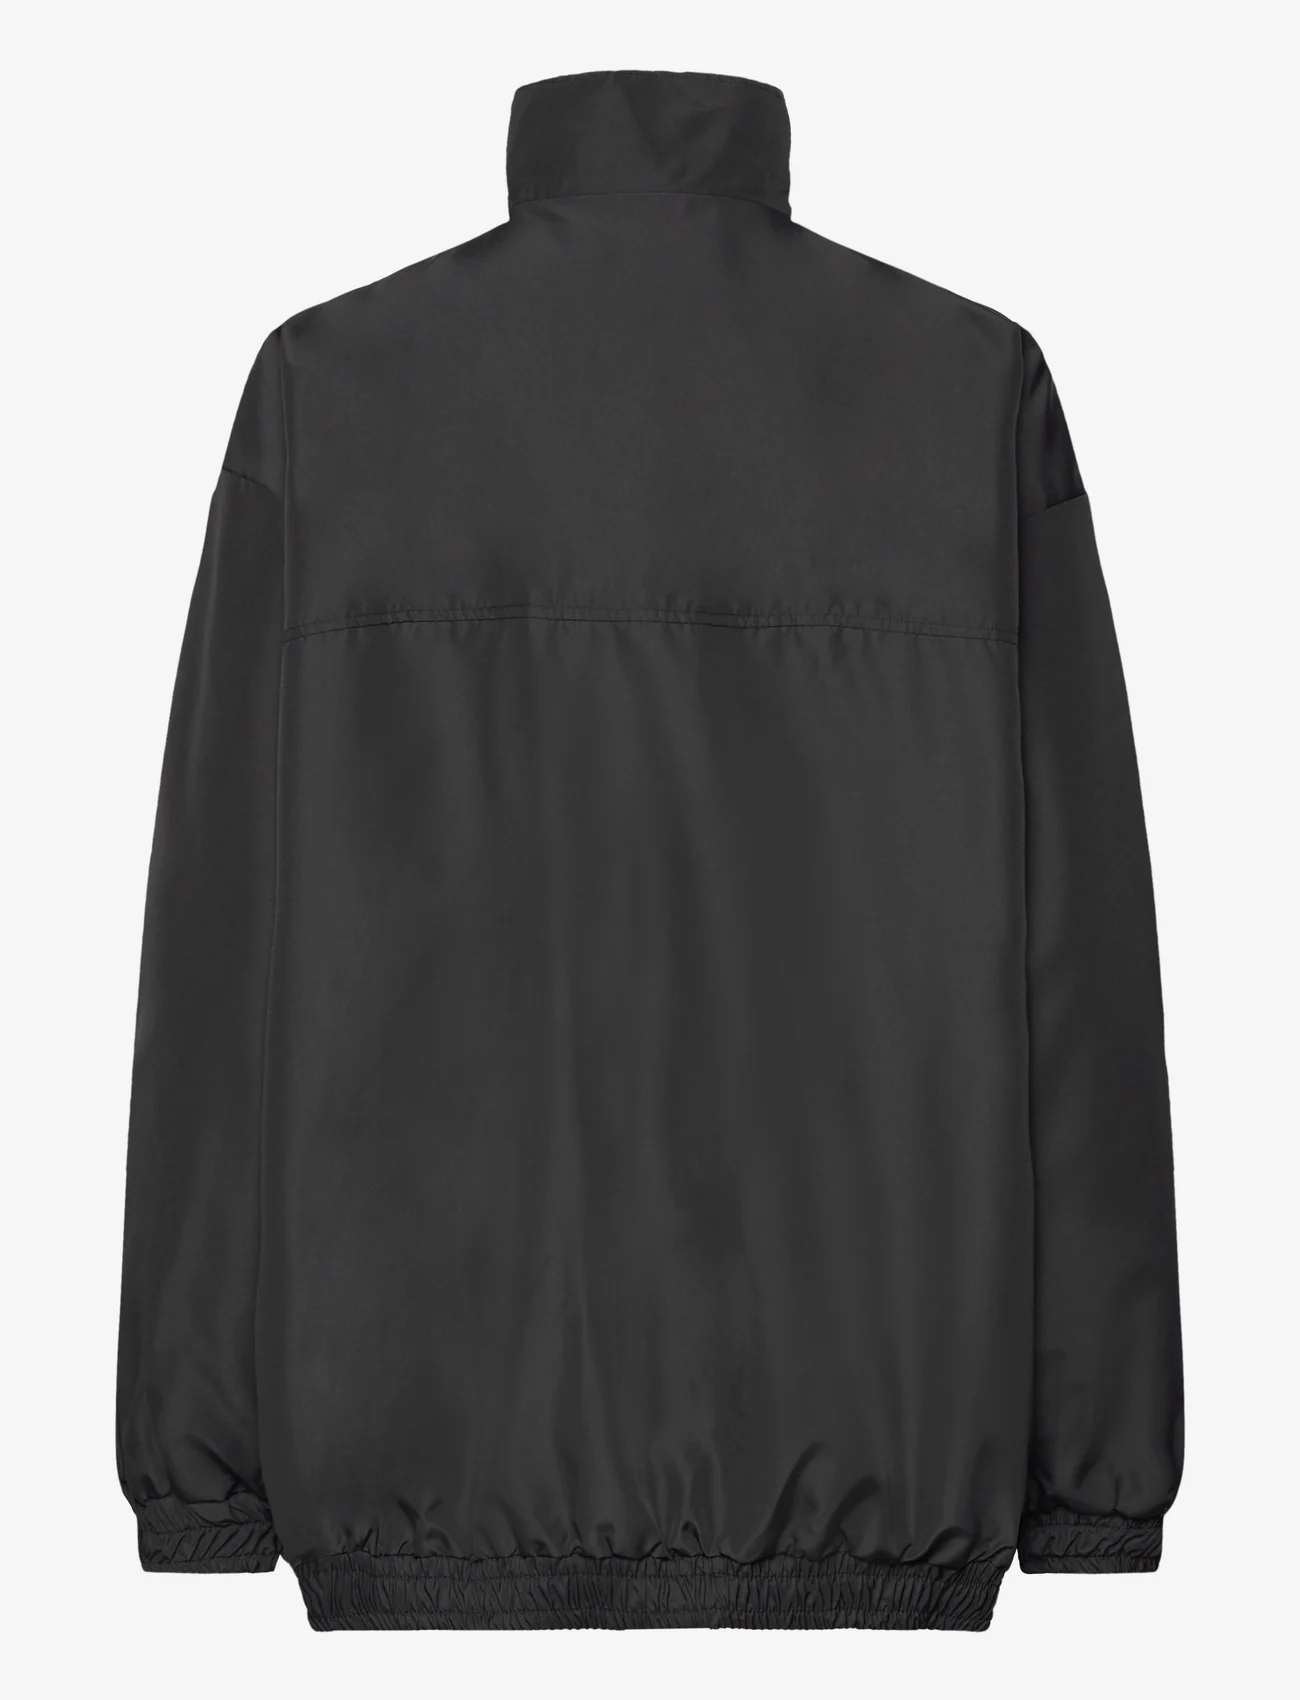 H2O Fagerholt - Windy jacket - lentejassen - black - 1